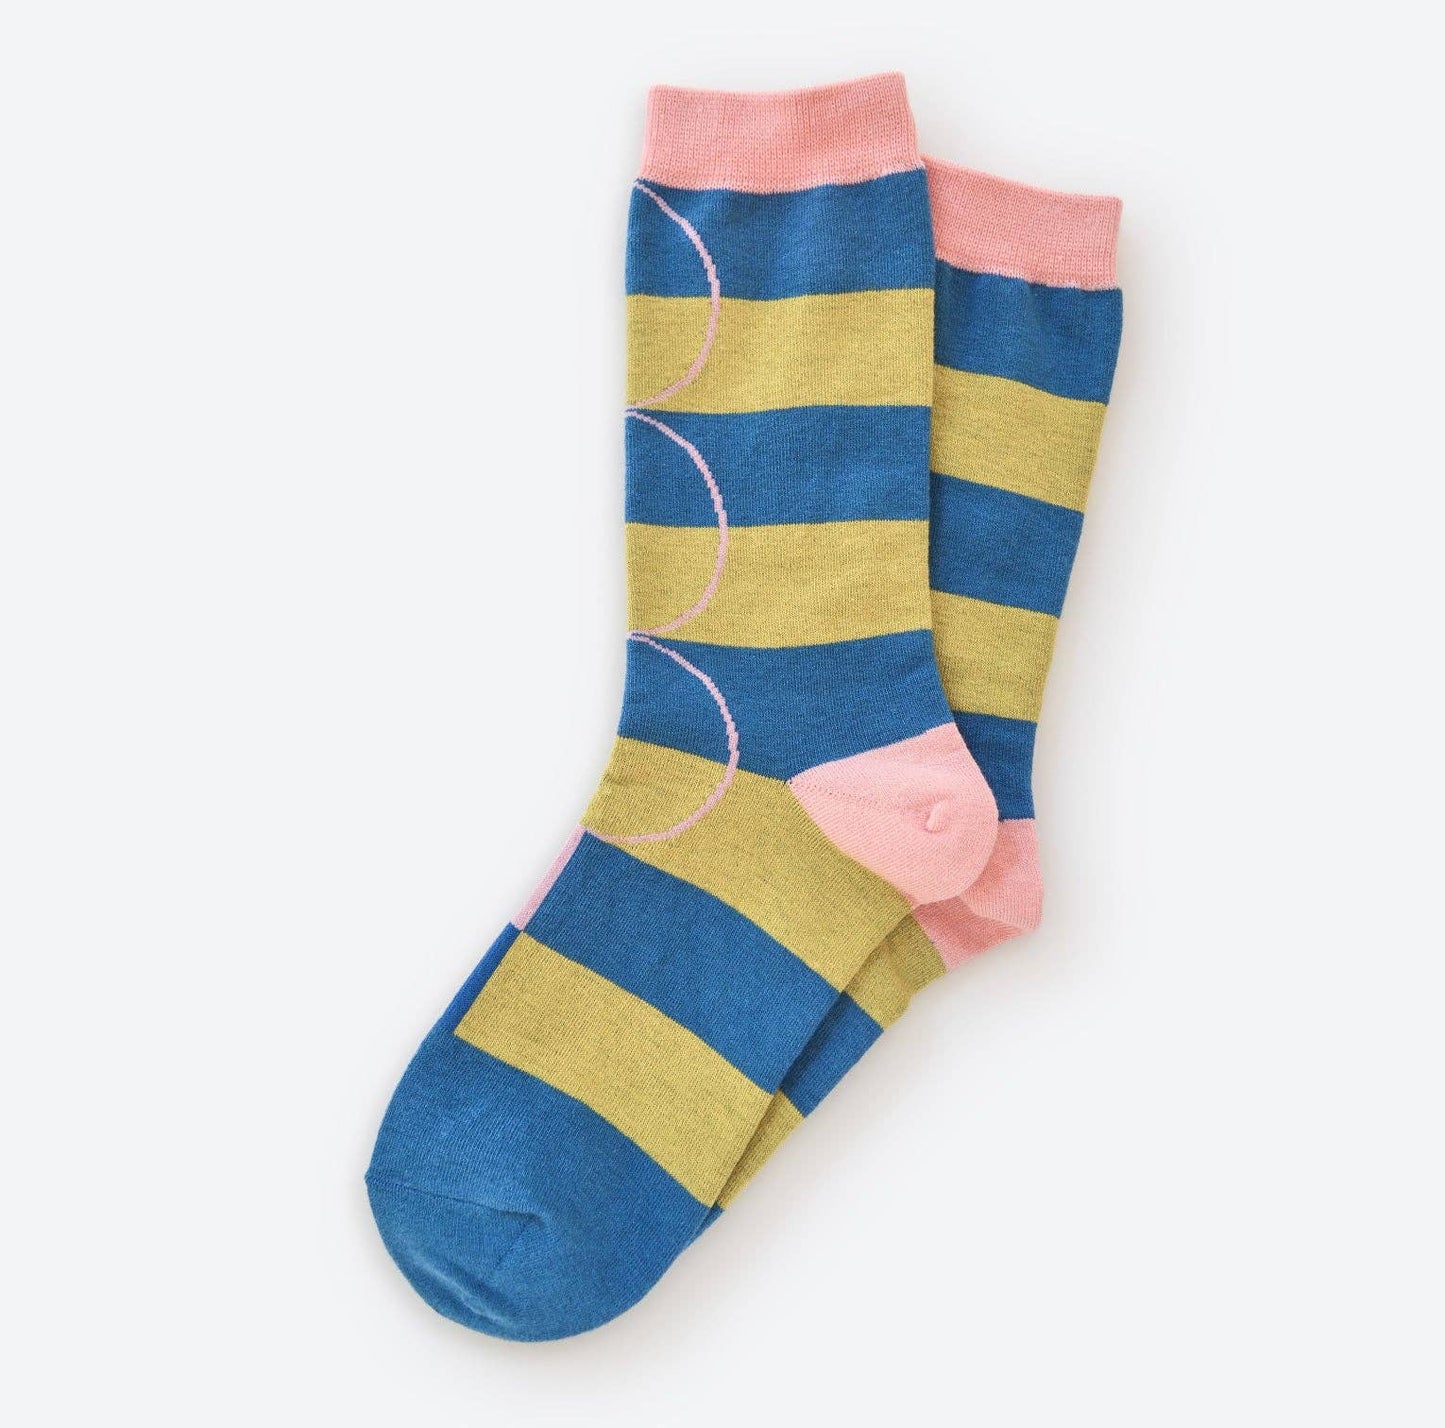 Hooray Sock Co. - Polk Socks: Small